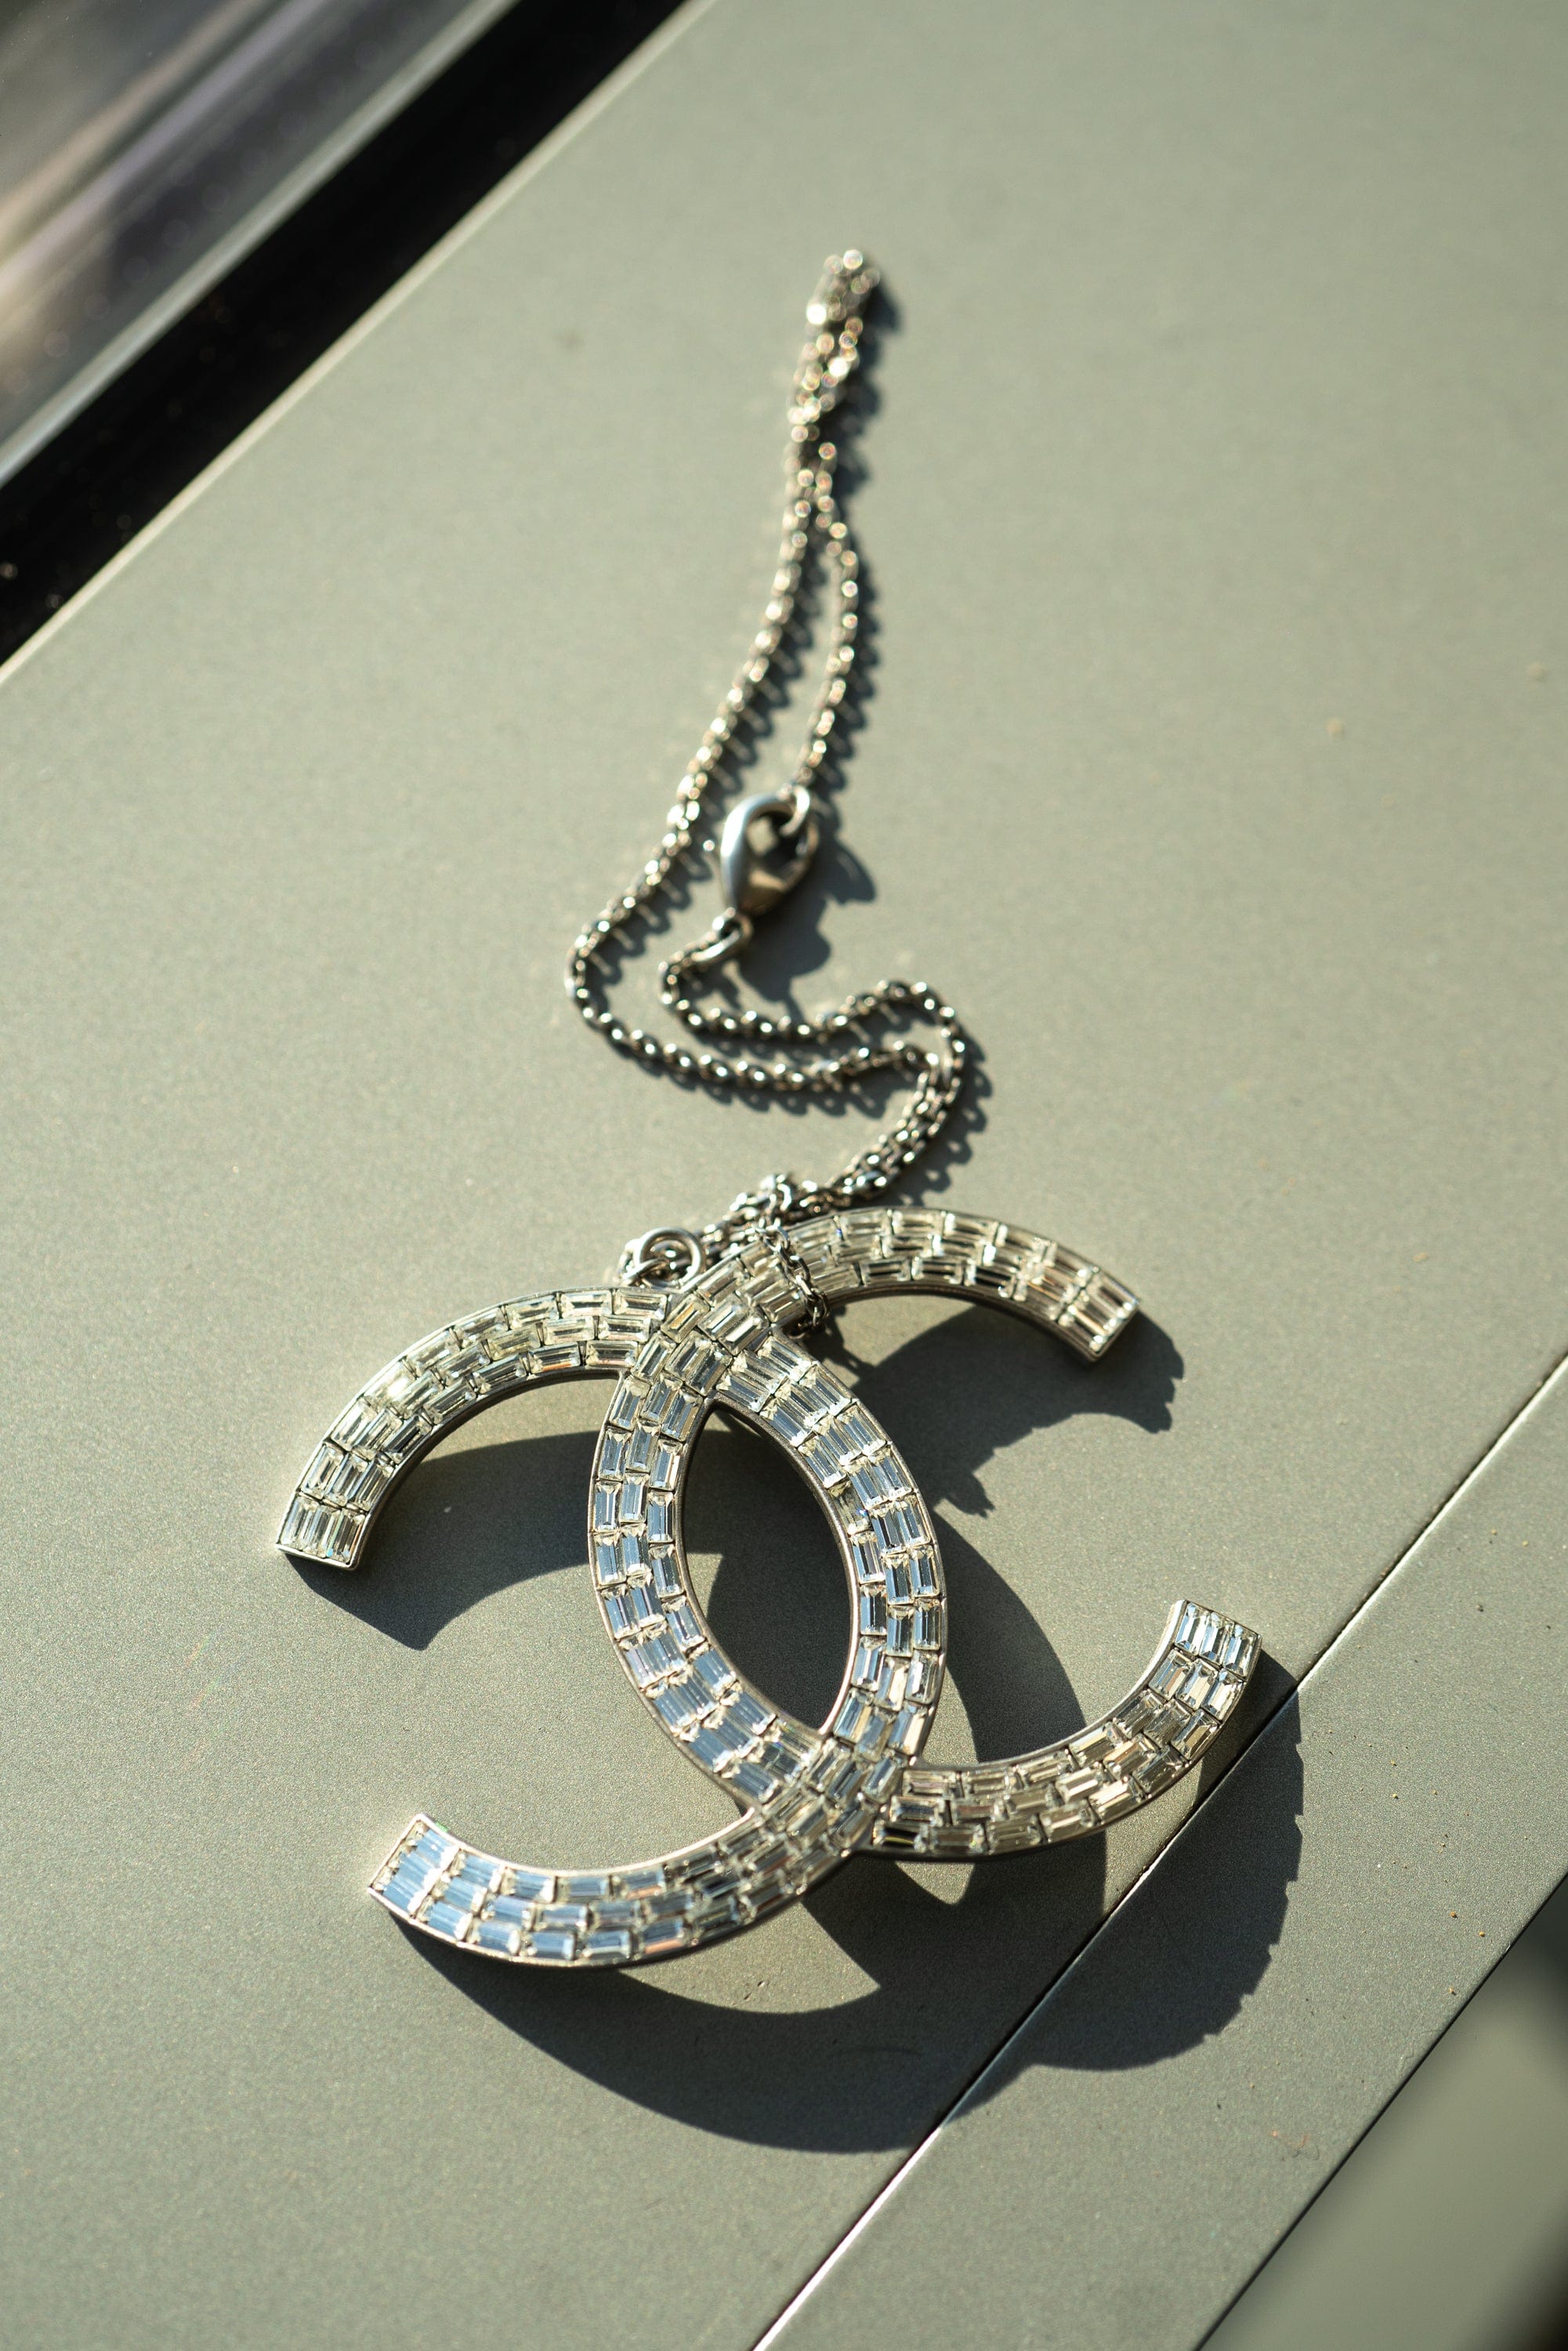 Chanel Silver CC Baguette Crystal Medium Pendant Necklace